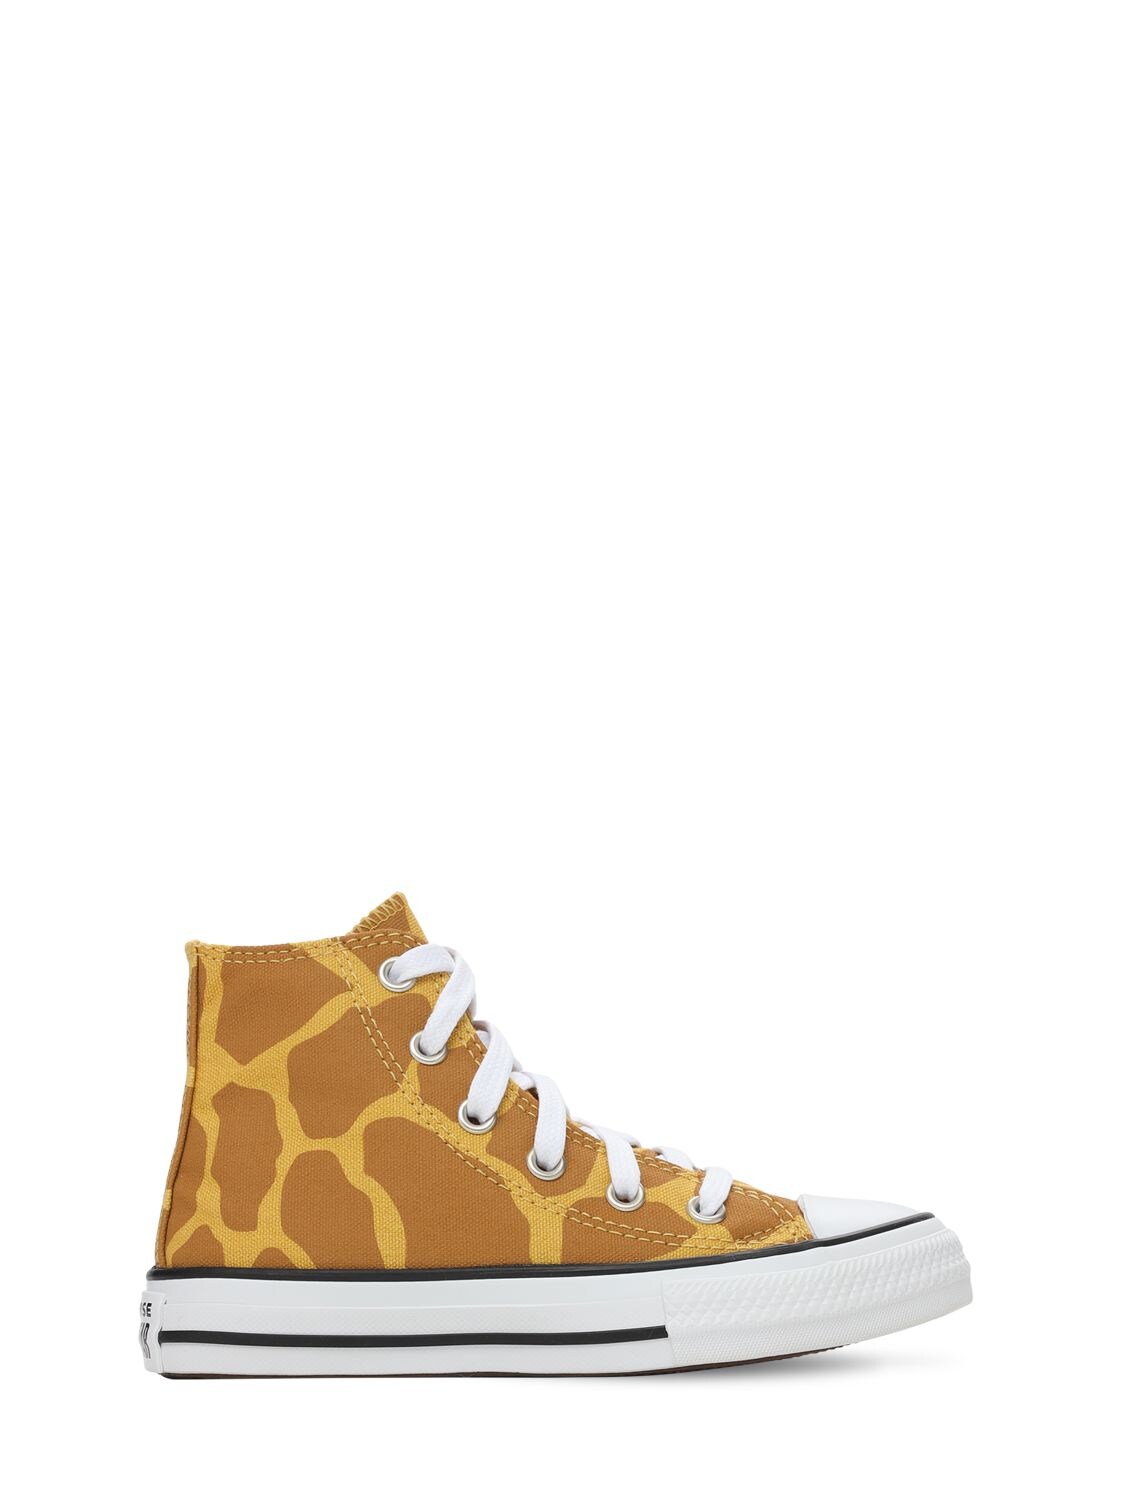 Image of Giraffe Print Chuck Taylor Sneakers